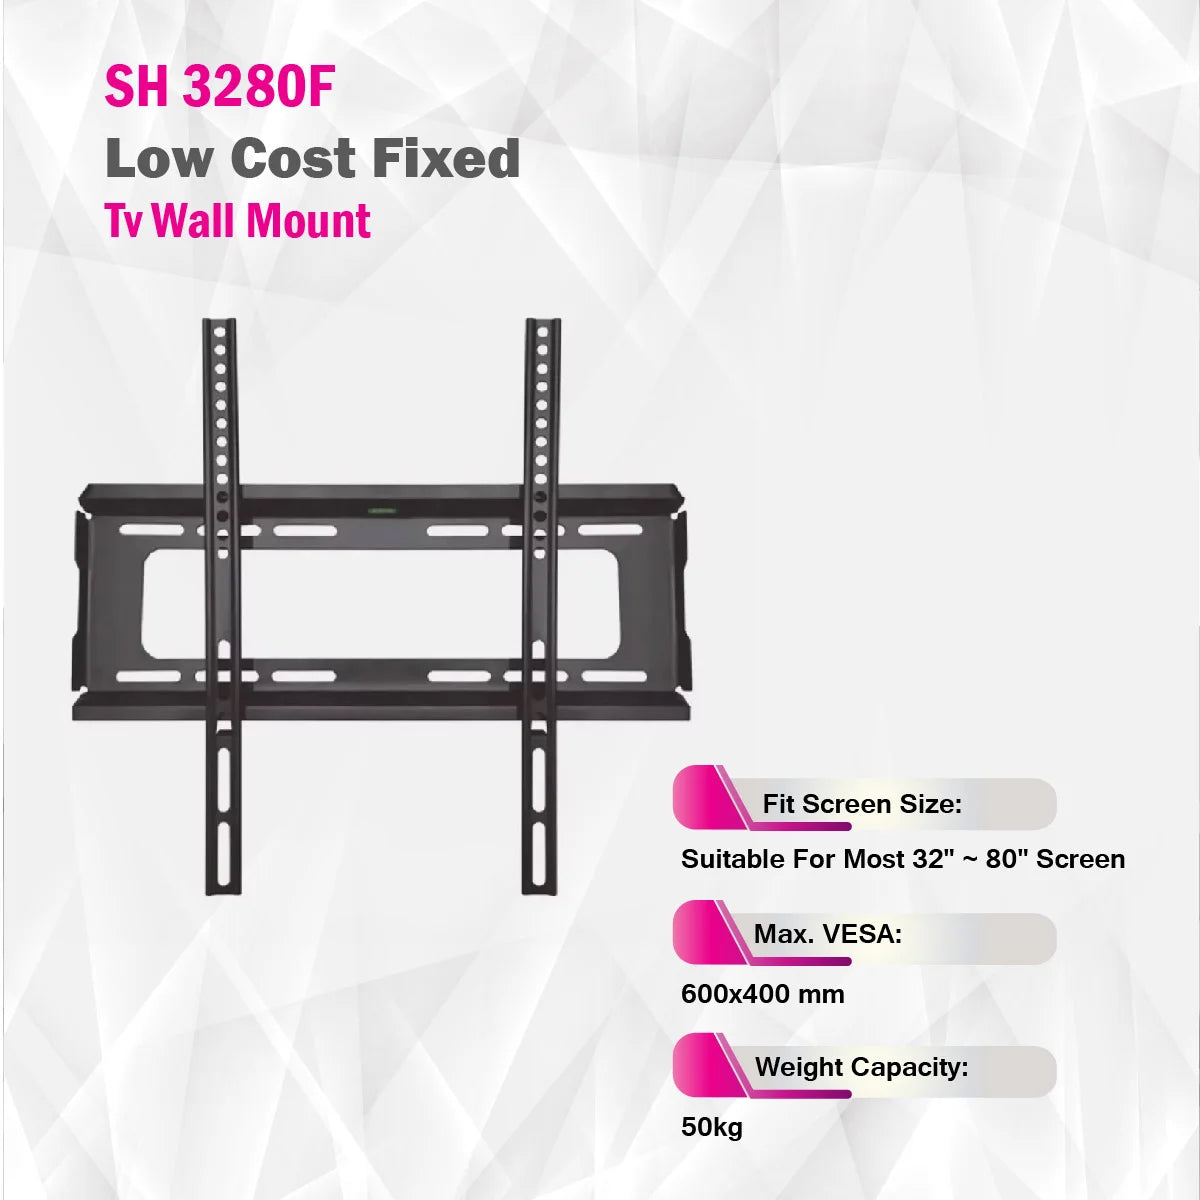 Skill Tech SH 3280F - Low Cost Fixed TV Wall Mount